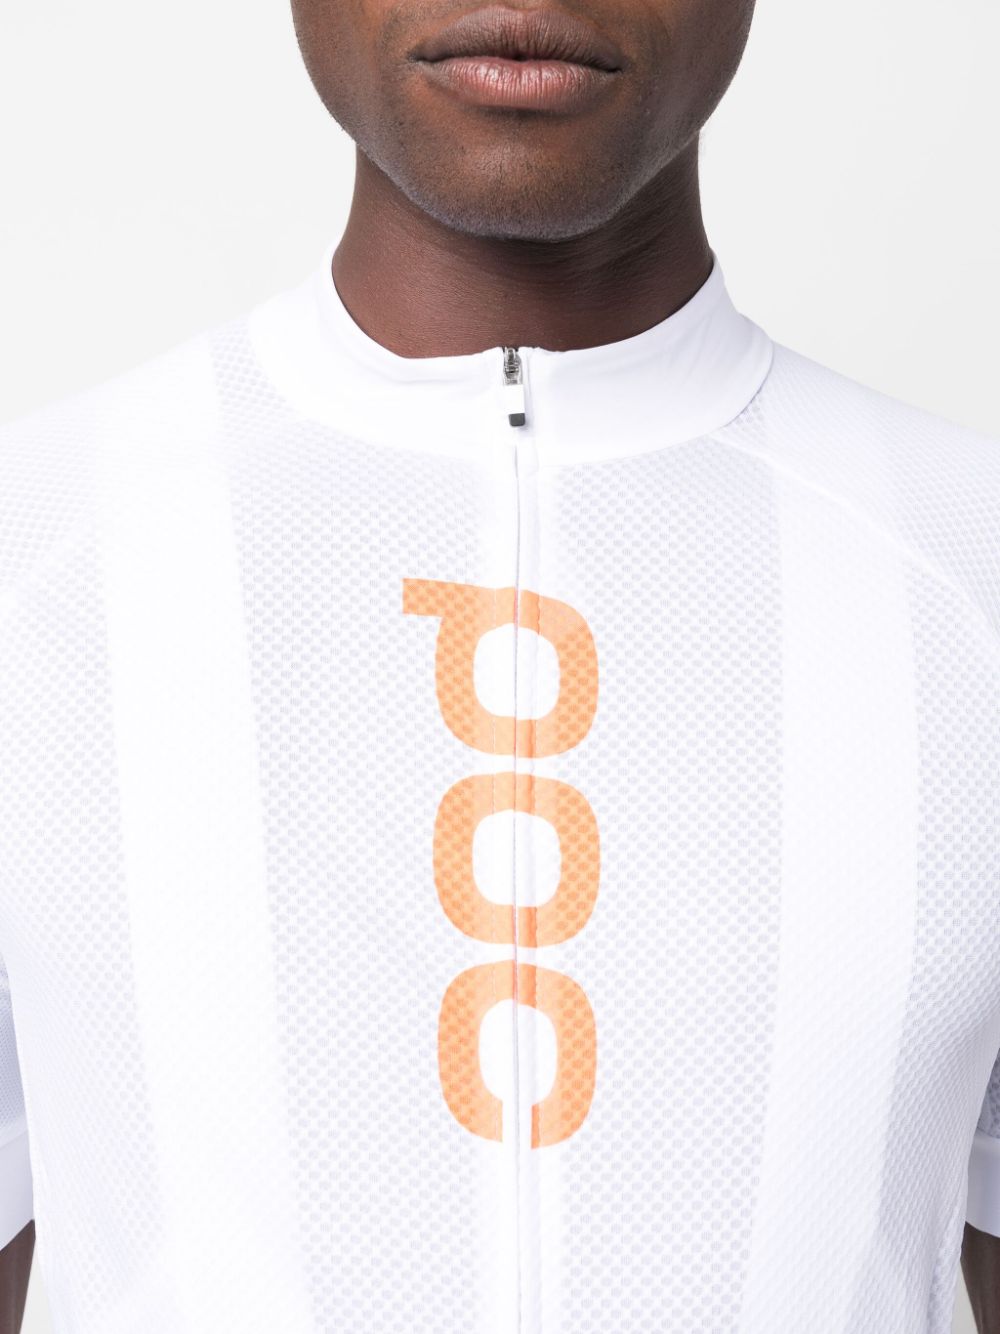 Logo-print zipped cycling top